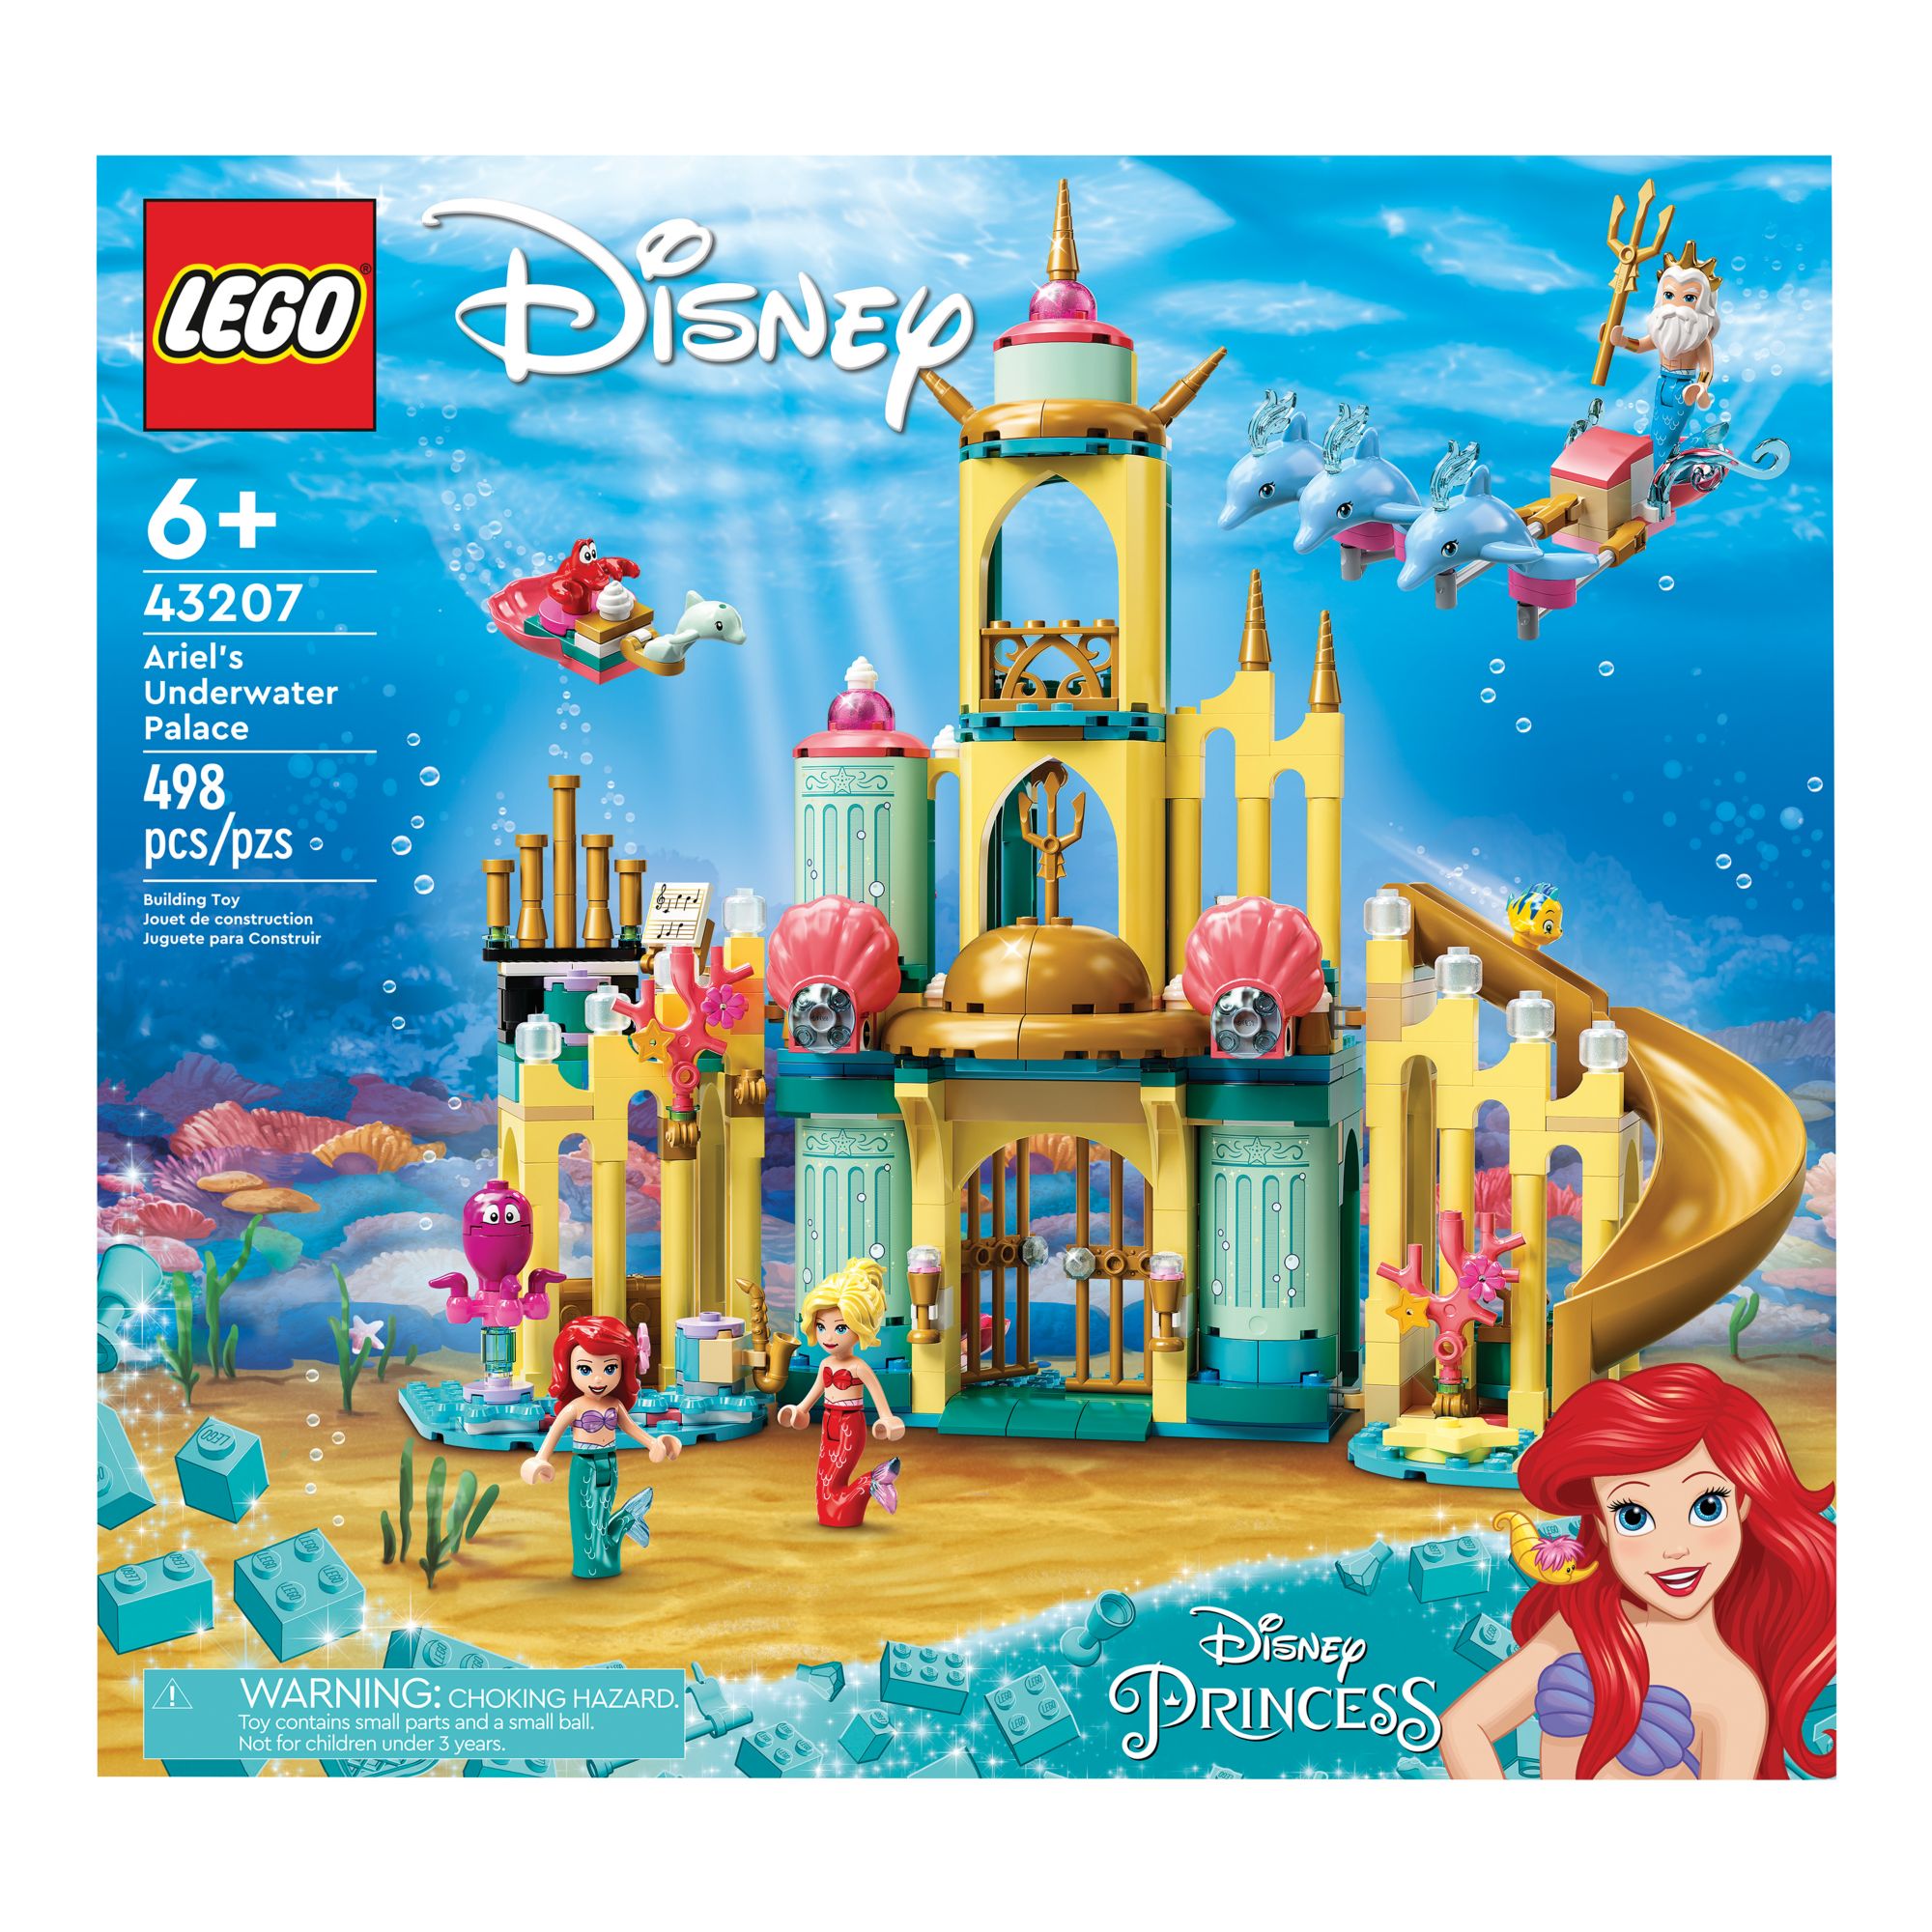 About LEGO®, Disney Princess™